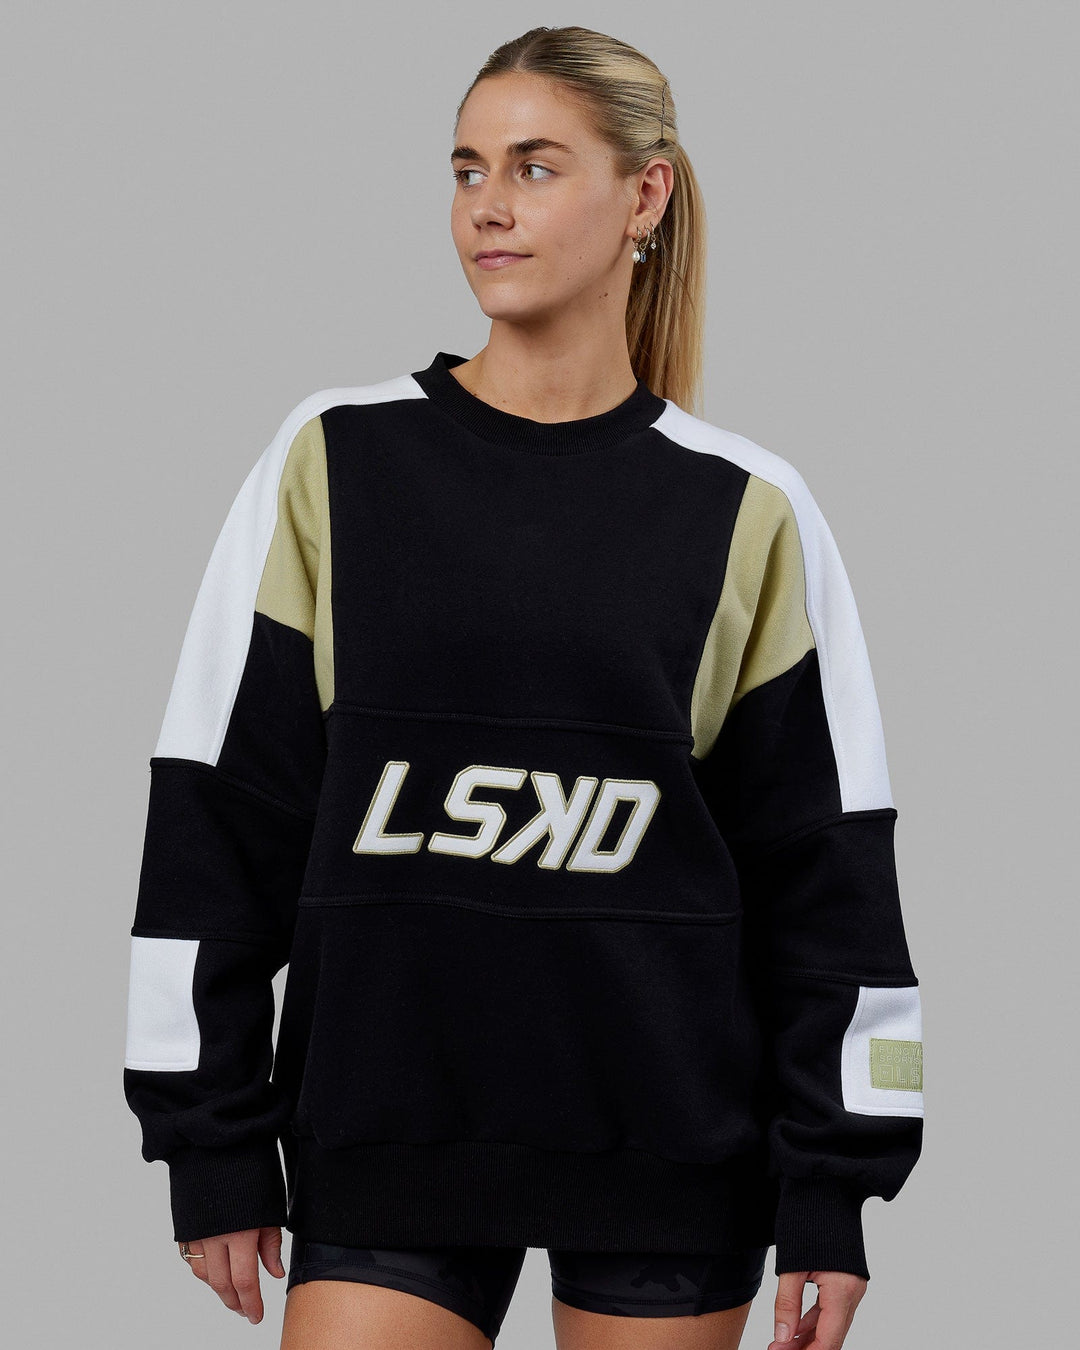 Woman wearing Unisex Slam Sweater Oversize - Black-Gold